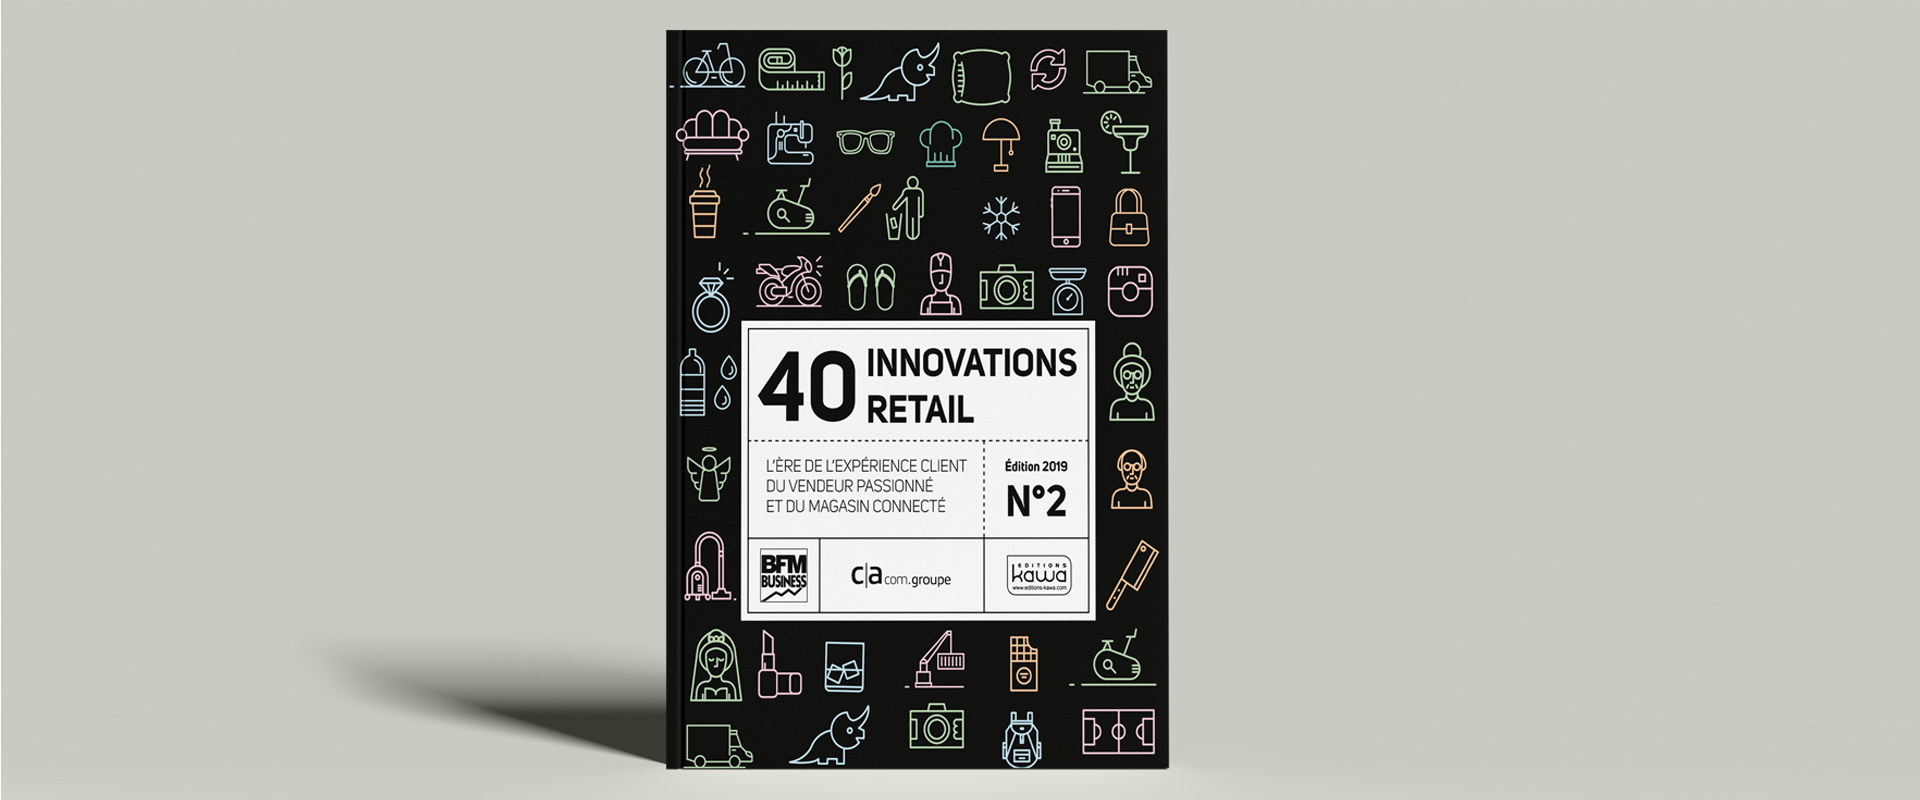 40 innovations retail n°2